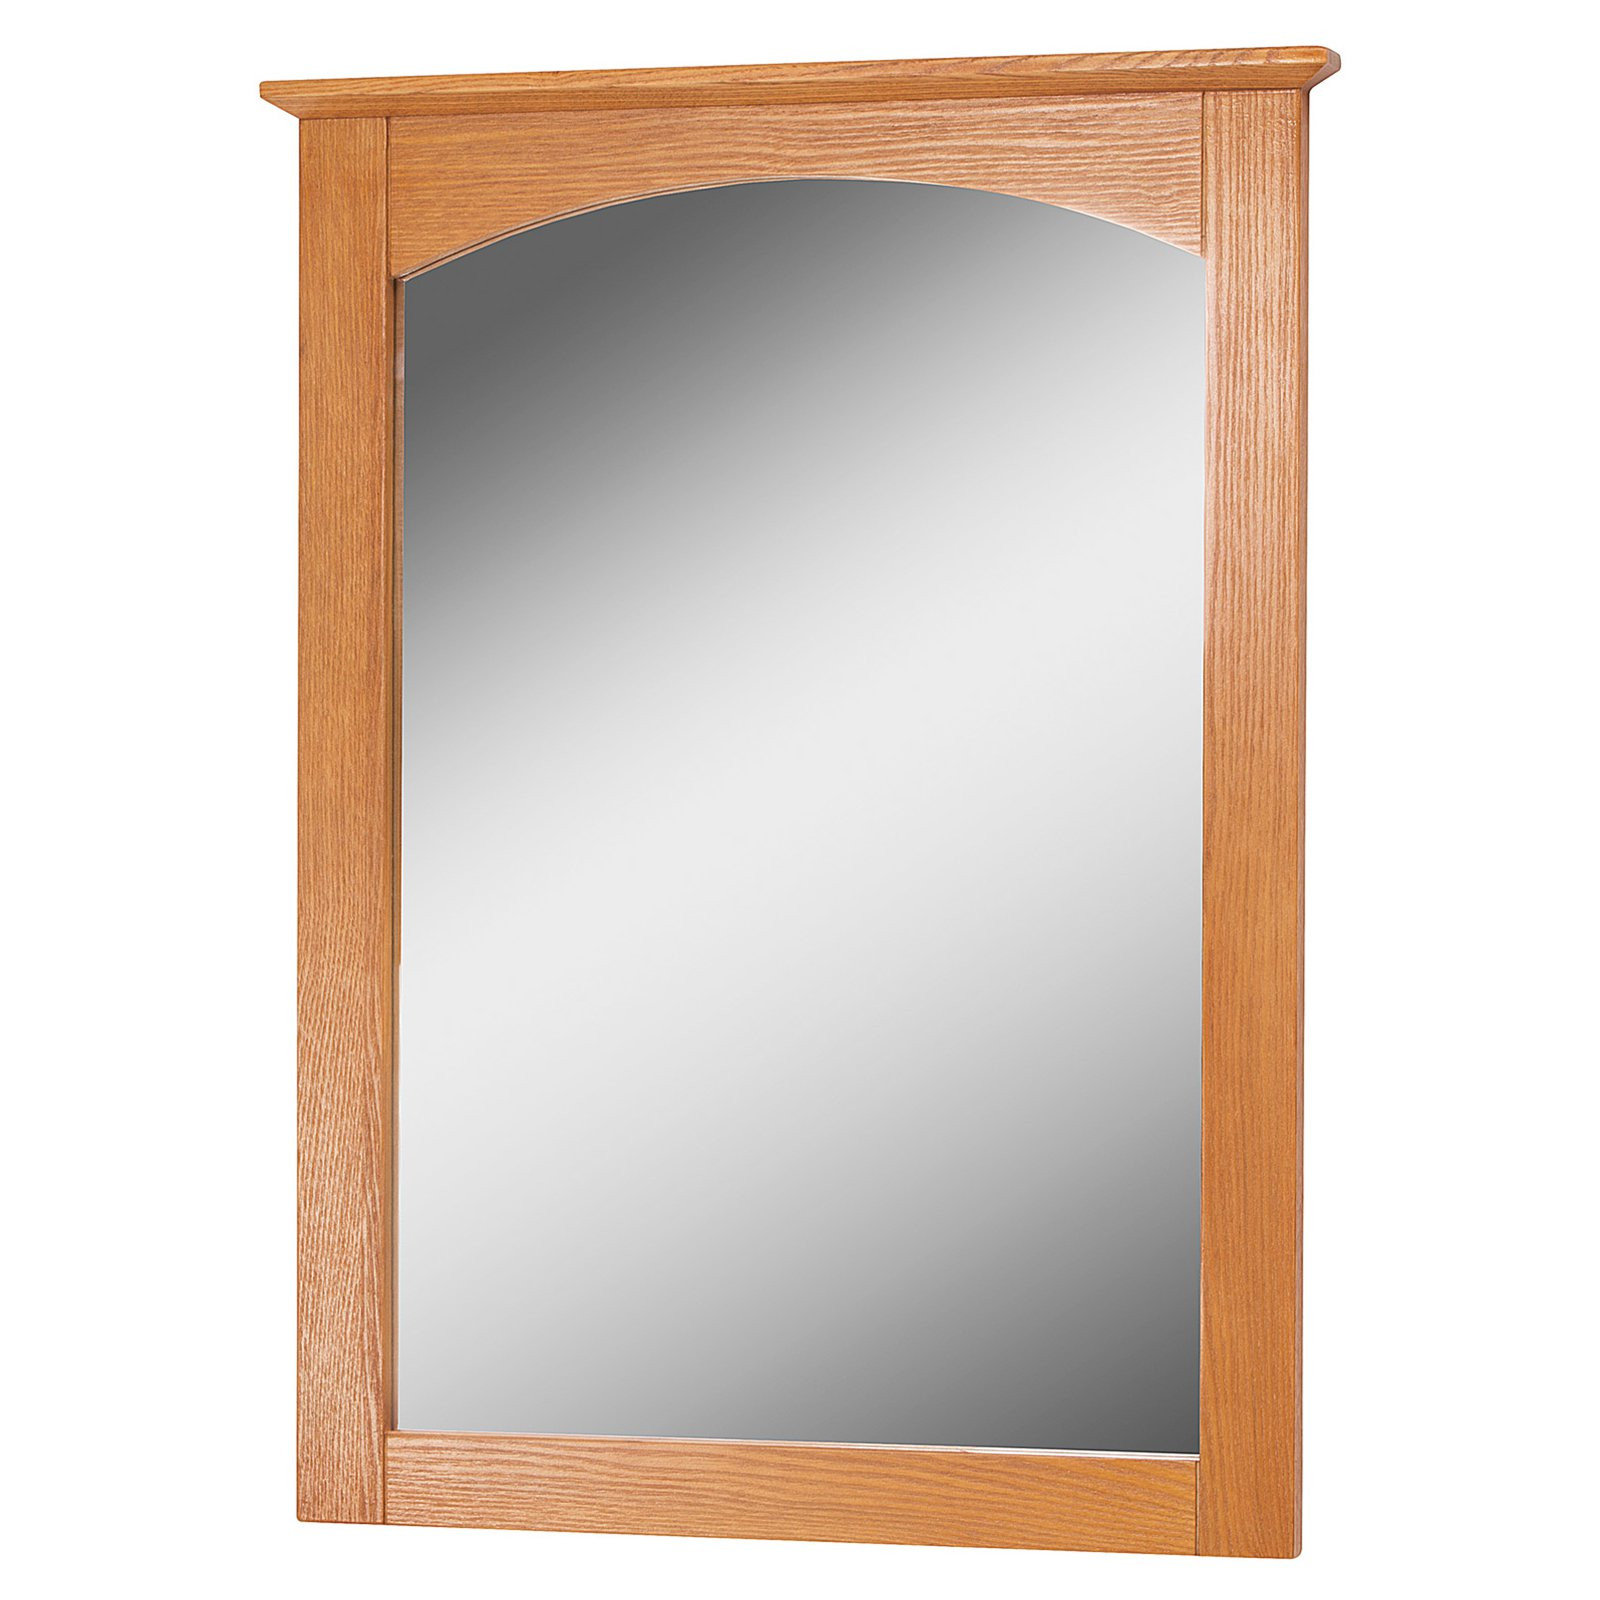 Oak Bathroom Mirror New foremost Worthington Bathroom Mirror Oak Mirrors at